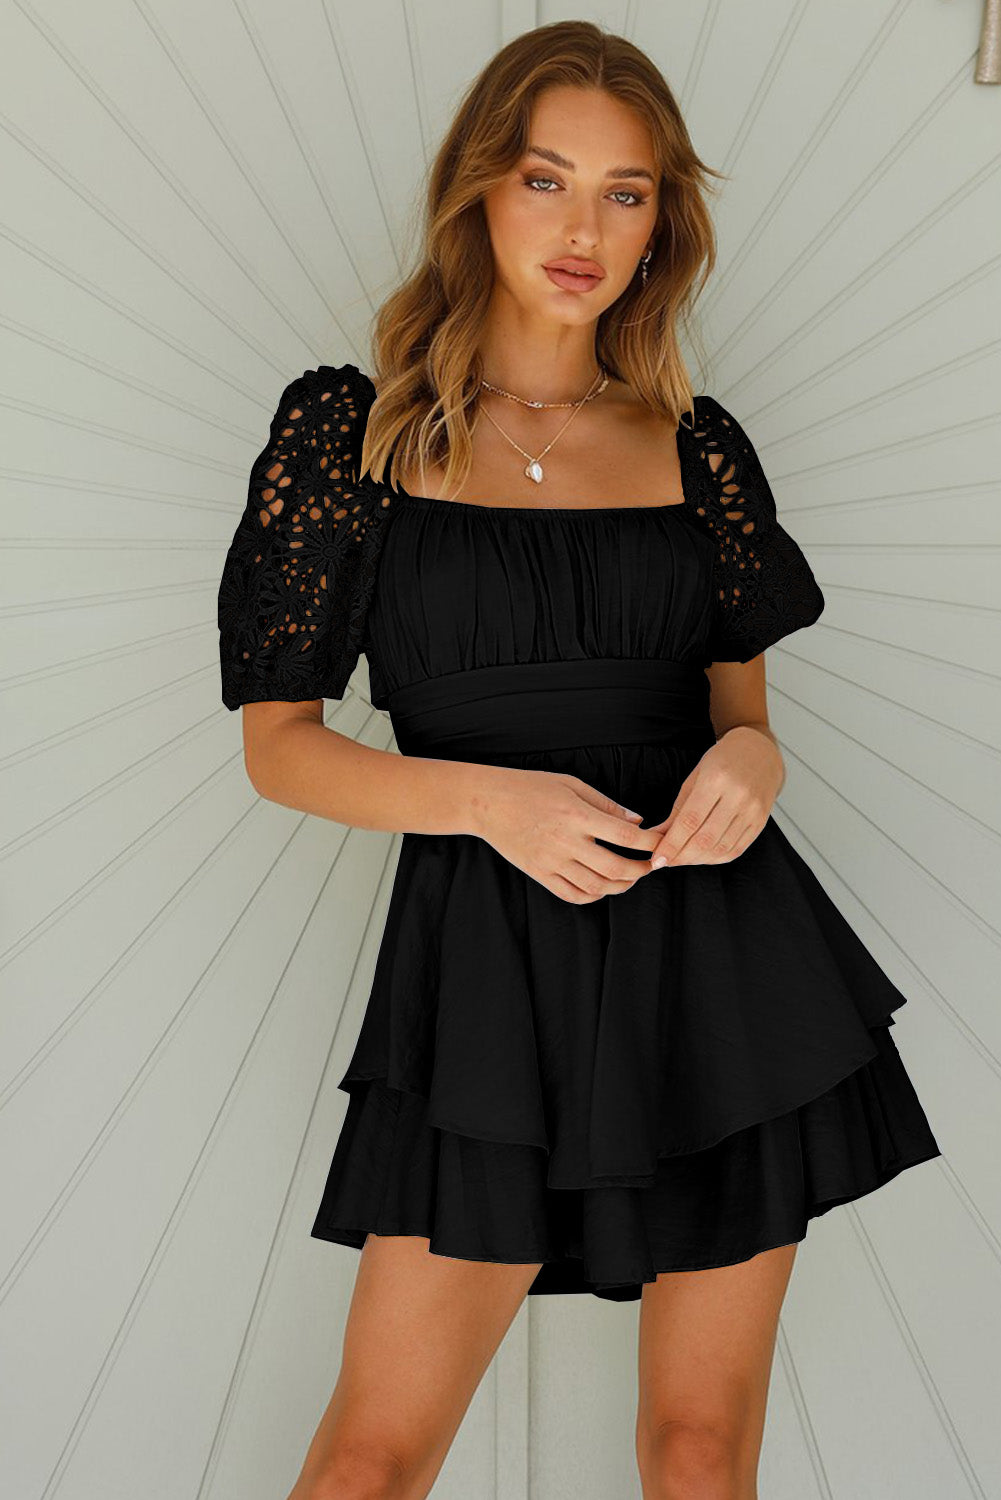 Black White Puff Sleeve Dress Square Neck Lace Ruffle A Line Mini Dress  LC2211141-2